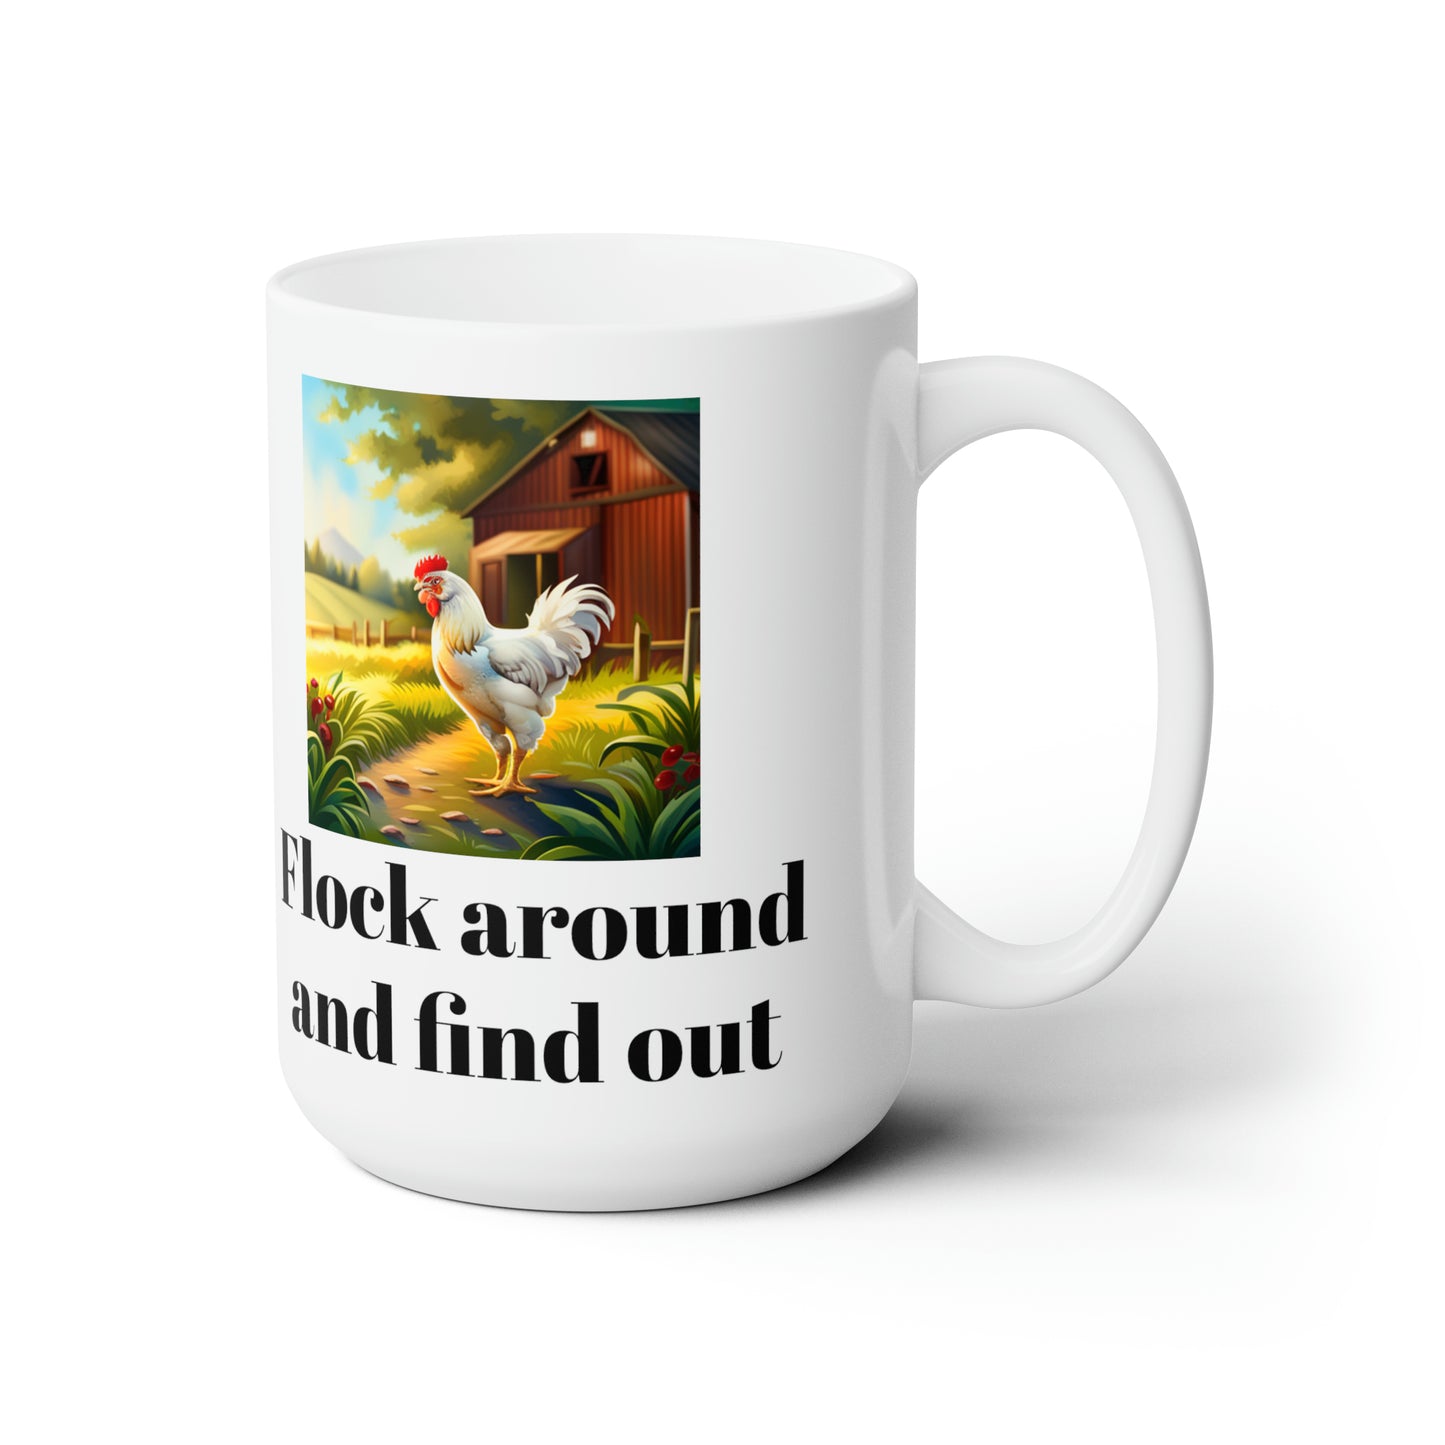 Flock around and find out, Ceramic Mug 15oz